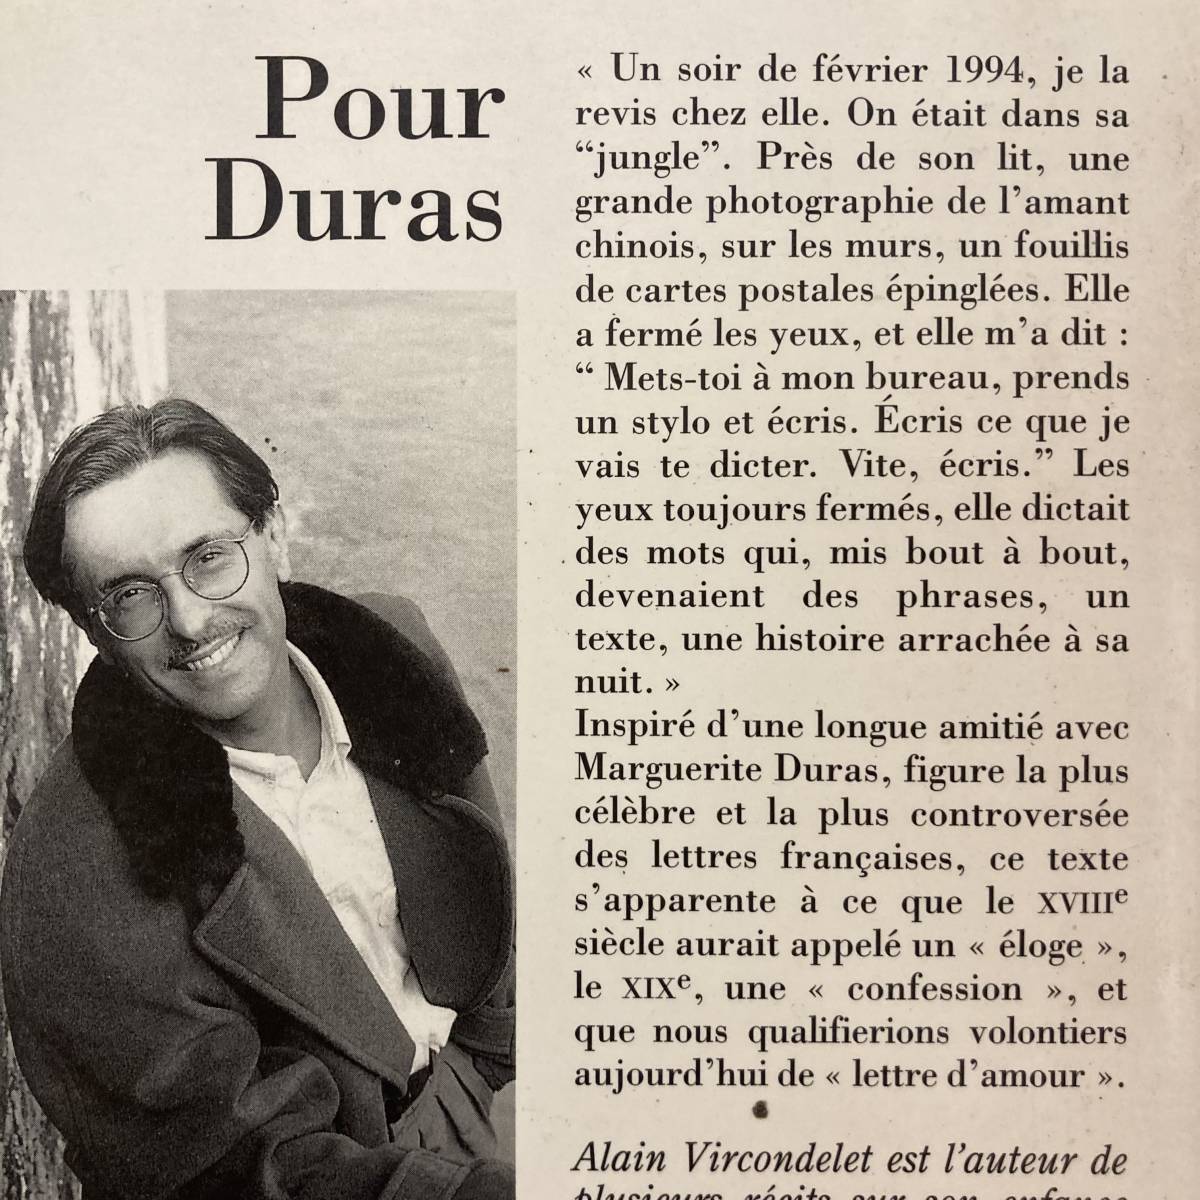 [. language foreign book ]Pour Duras / Alain Vircondelet( work )[ maru Gris to* Duras ]